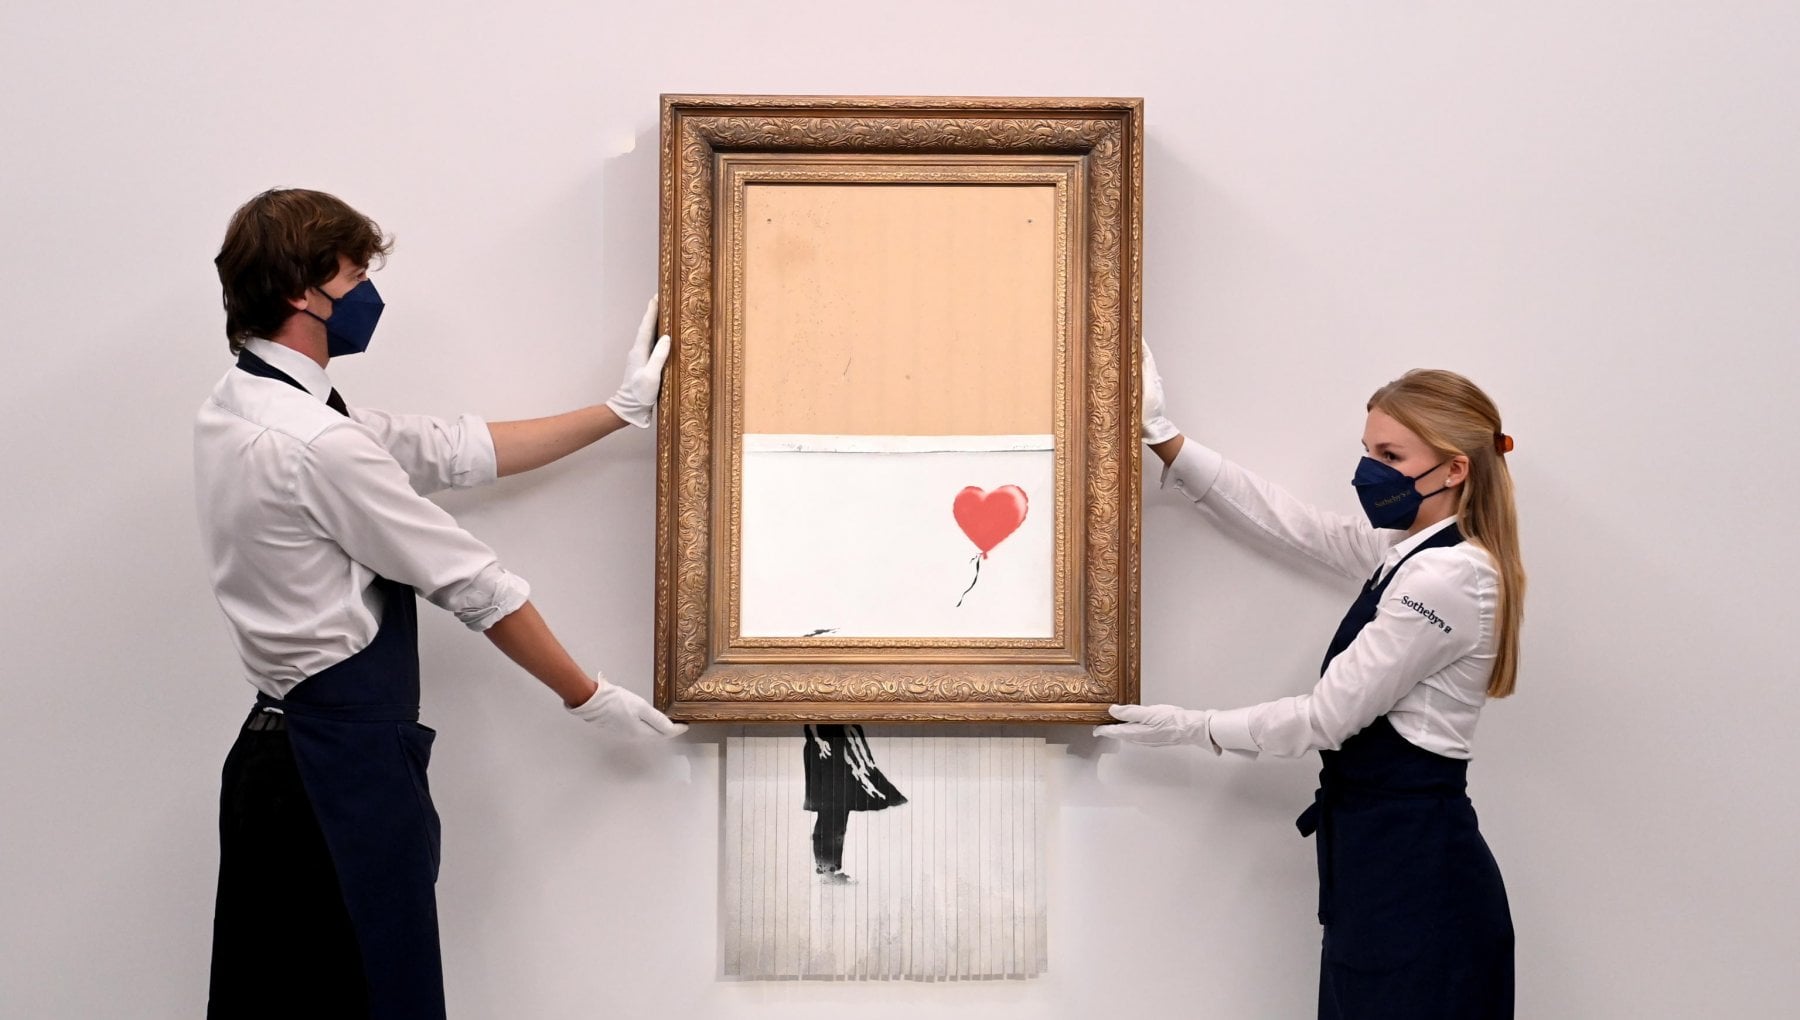 L’opera distrutta di Banksy venduta all’asta 22 milioni